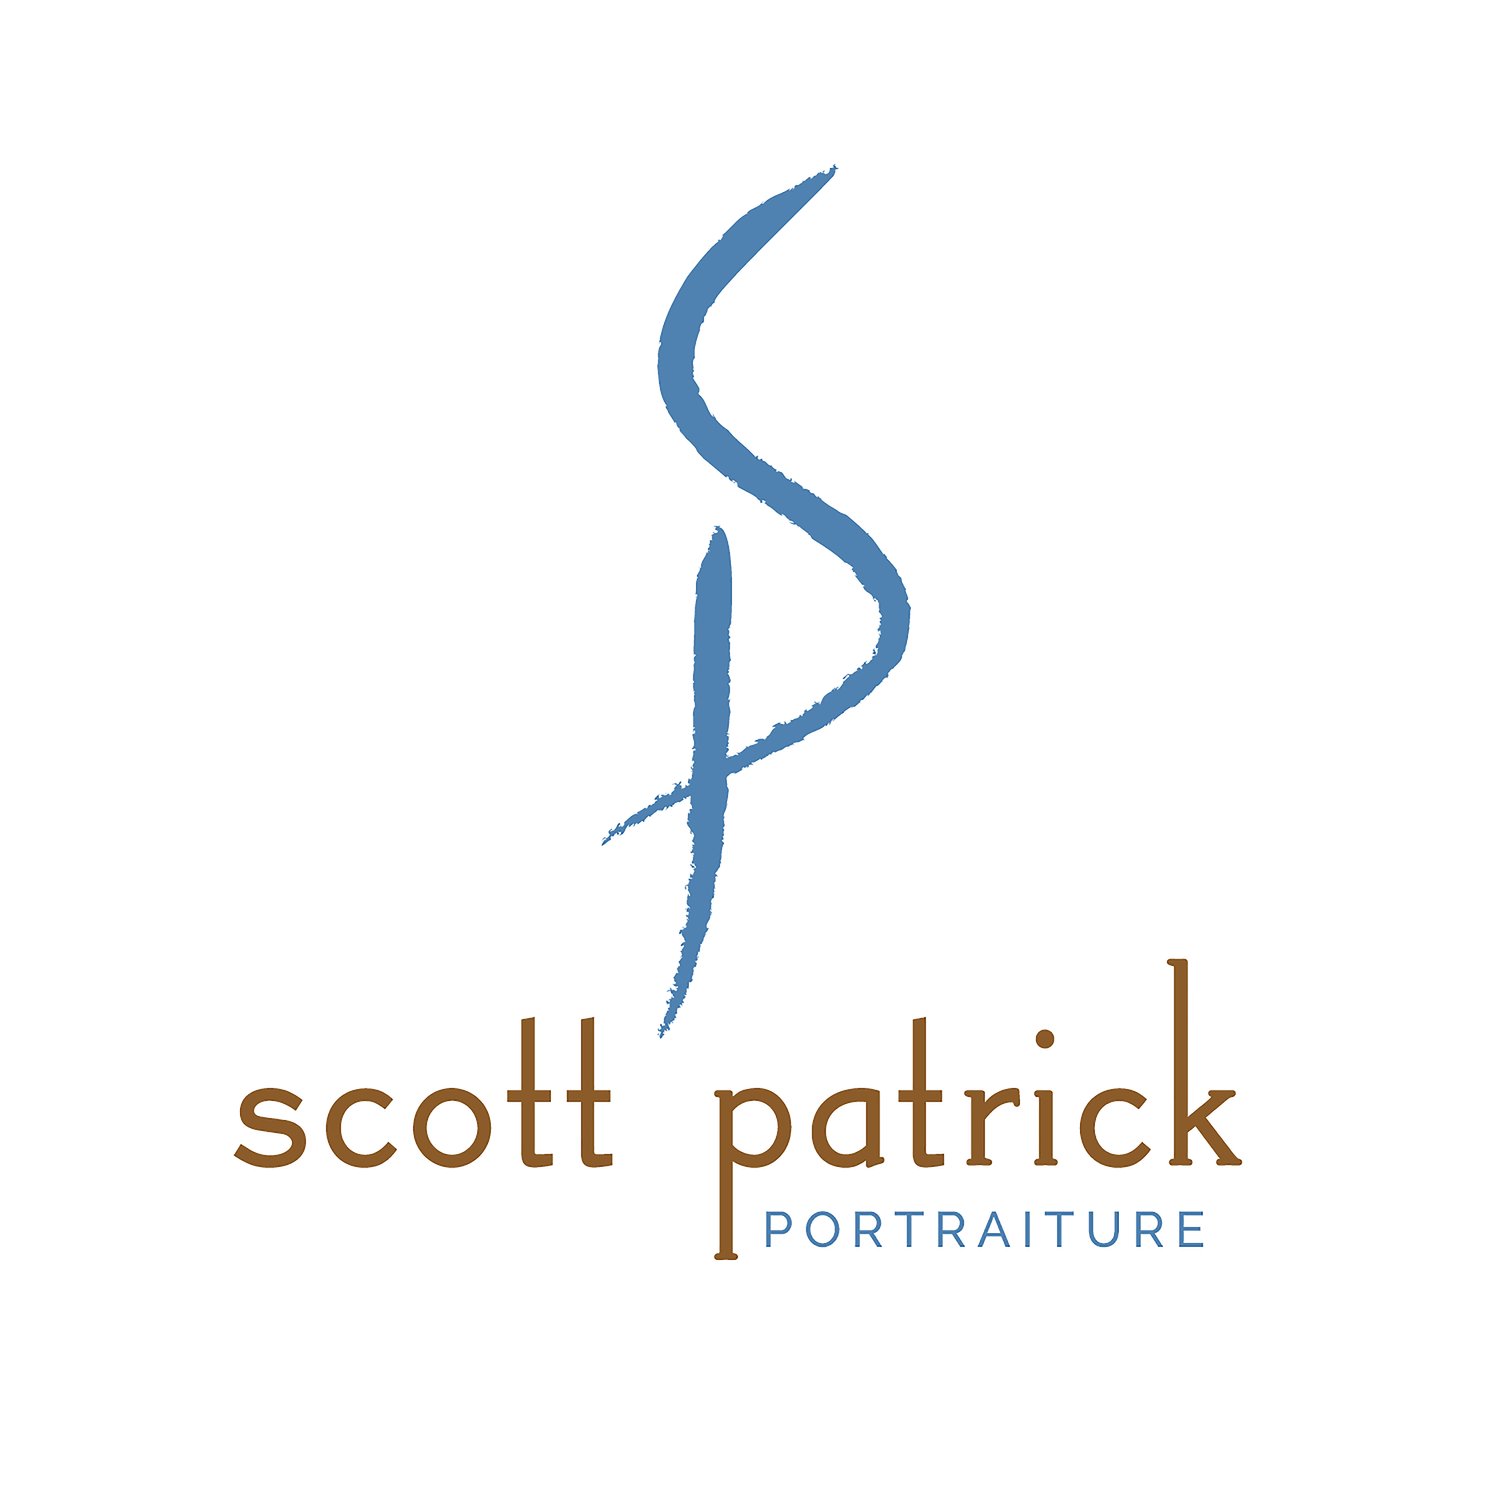 Scott Patrick Portraiture